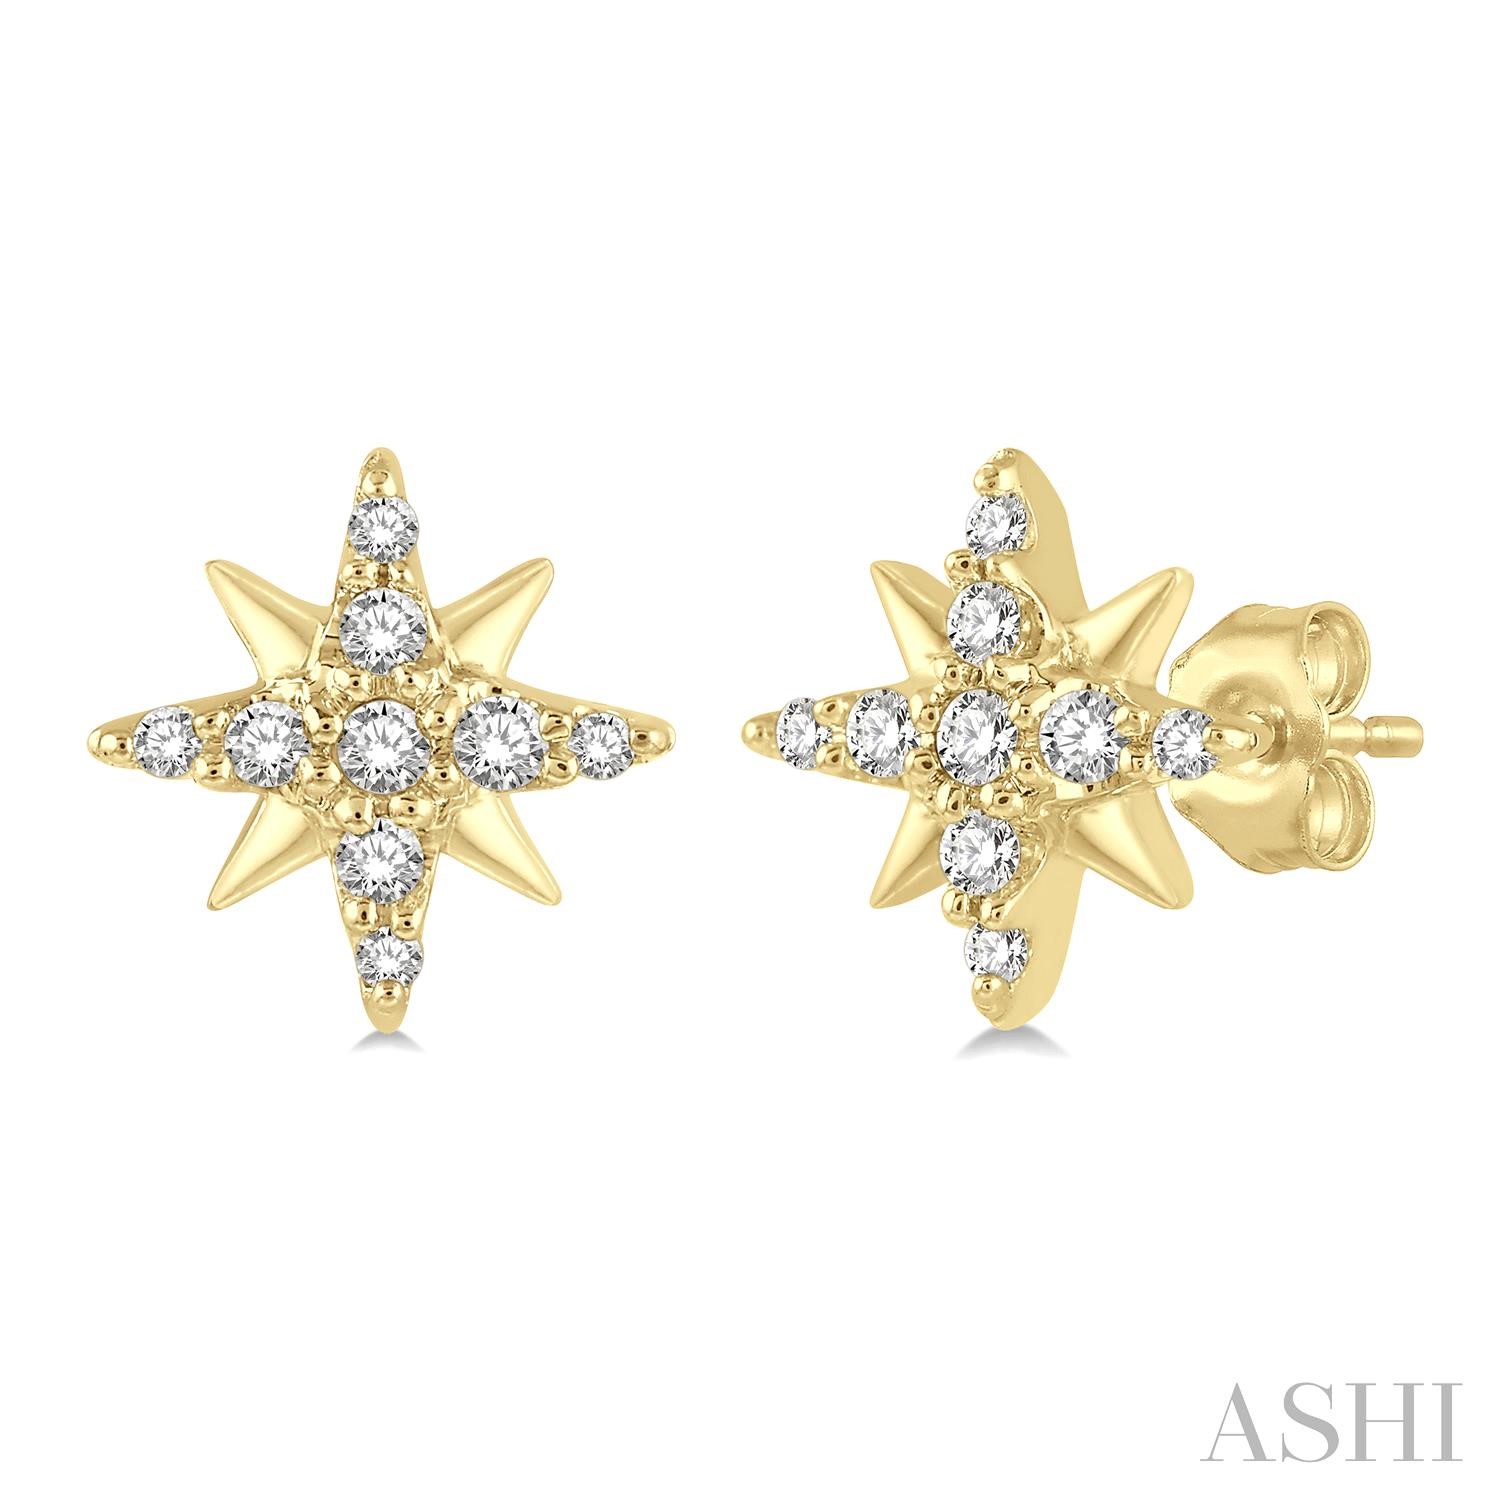 10 Karat Yellow Gold Petite Star Diamond Fashion Earrings